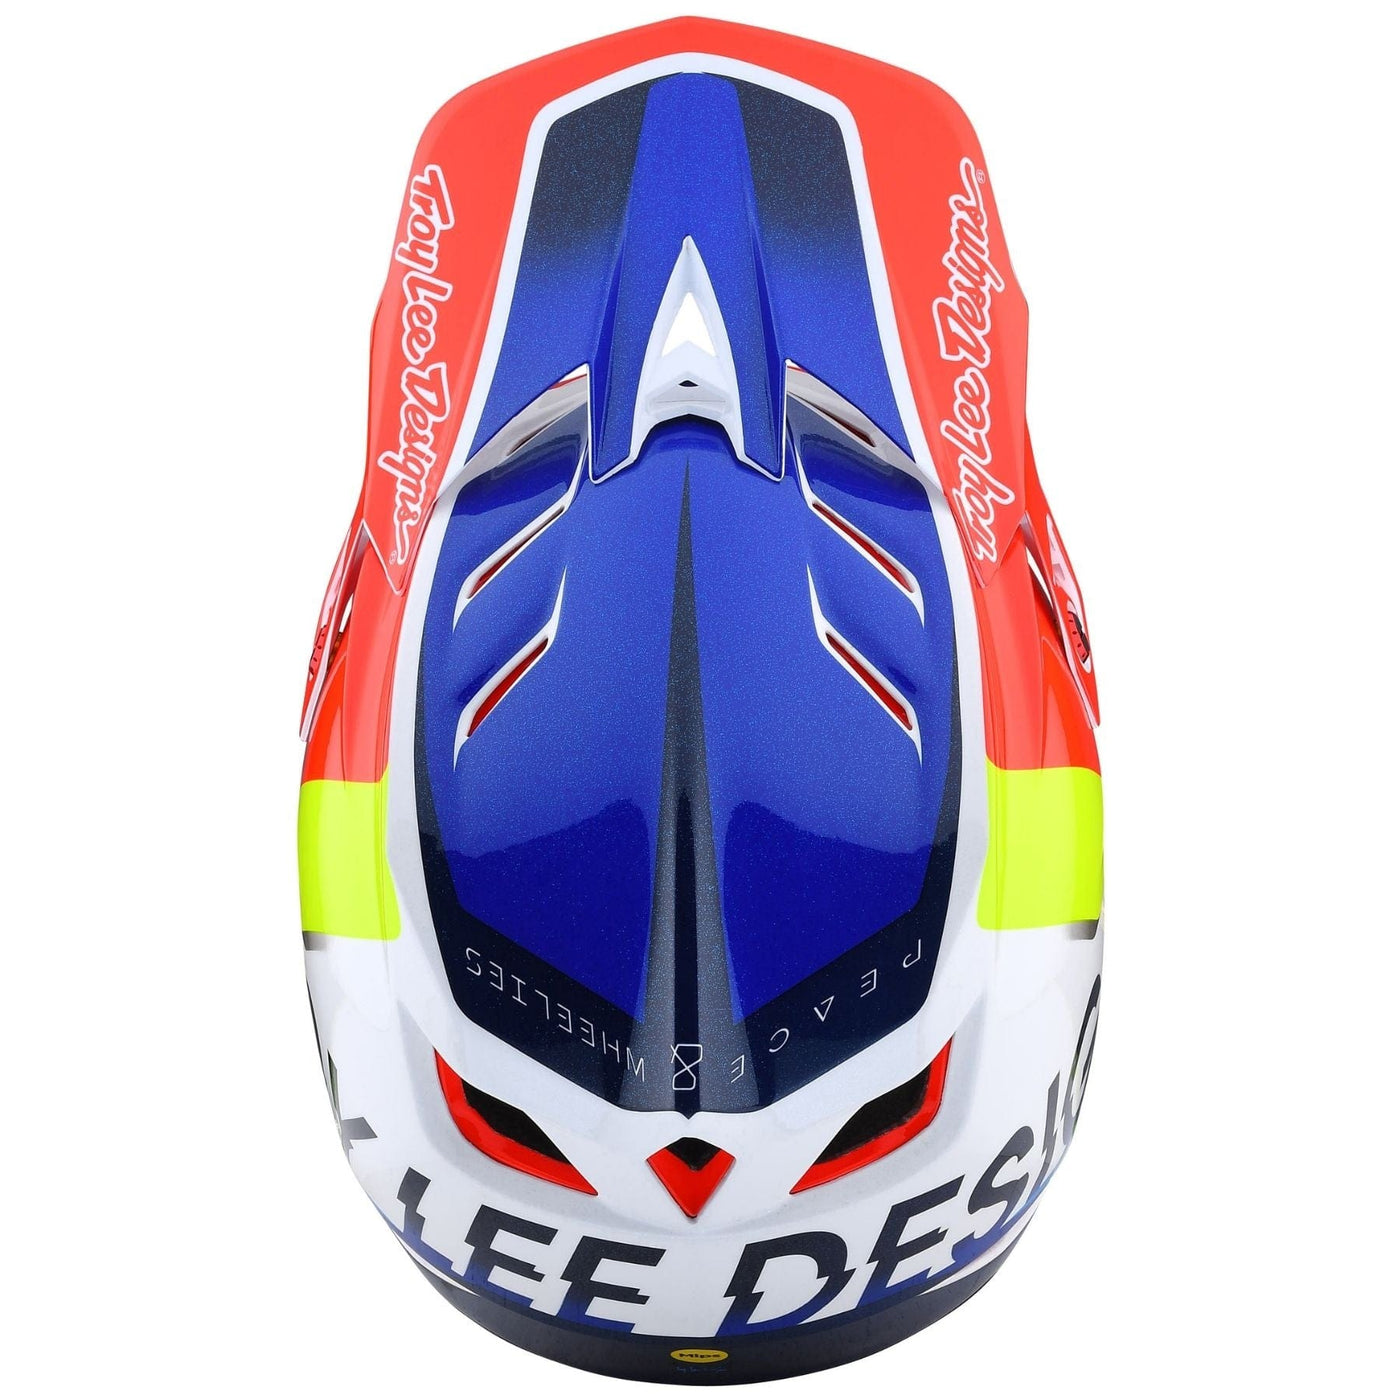 Troy Lee Desgins D4 Composite Helmet Visor - Qualifier White/Blue 8Lines Shop - Fast Shipping